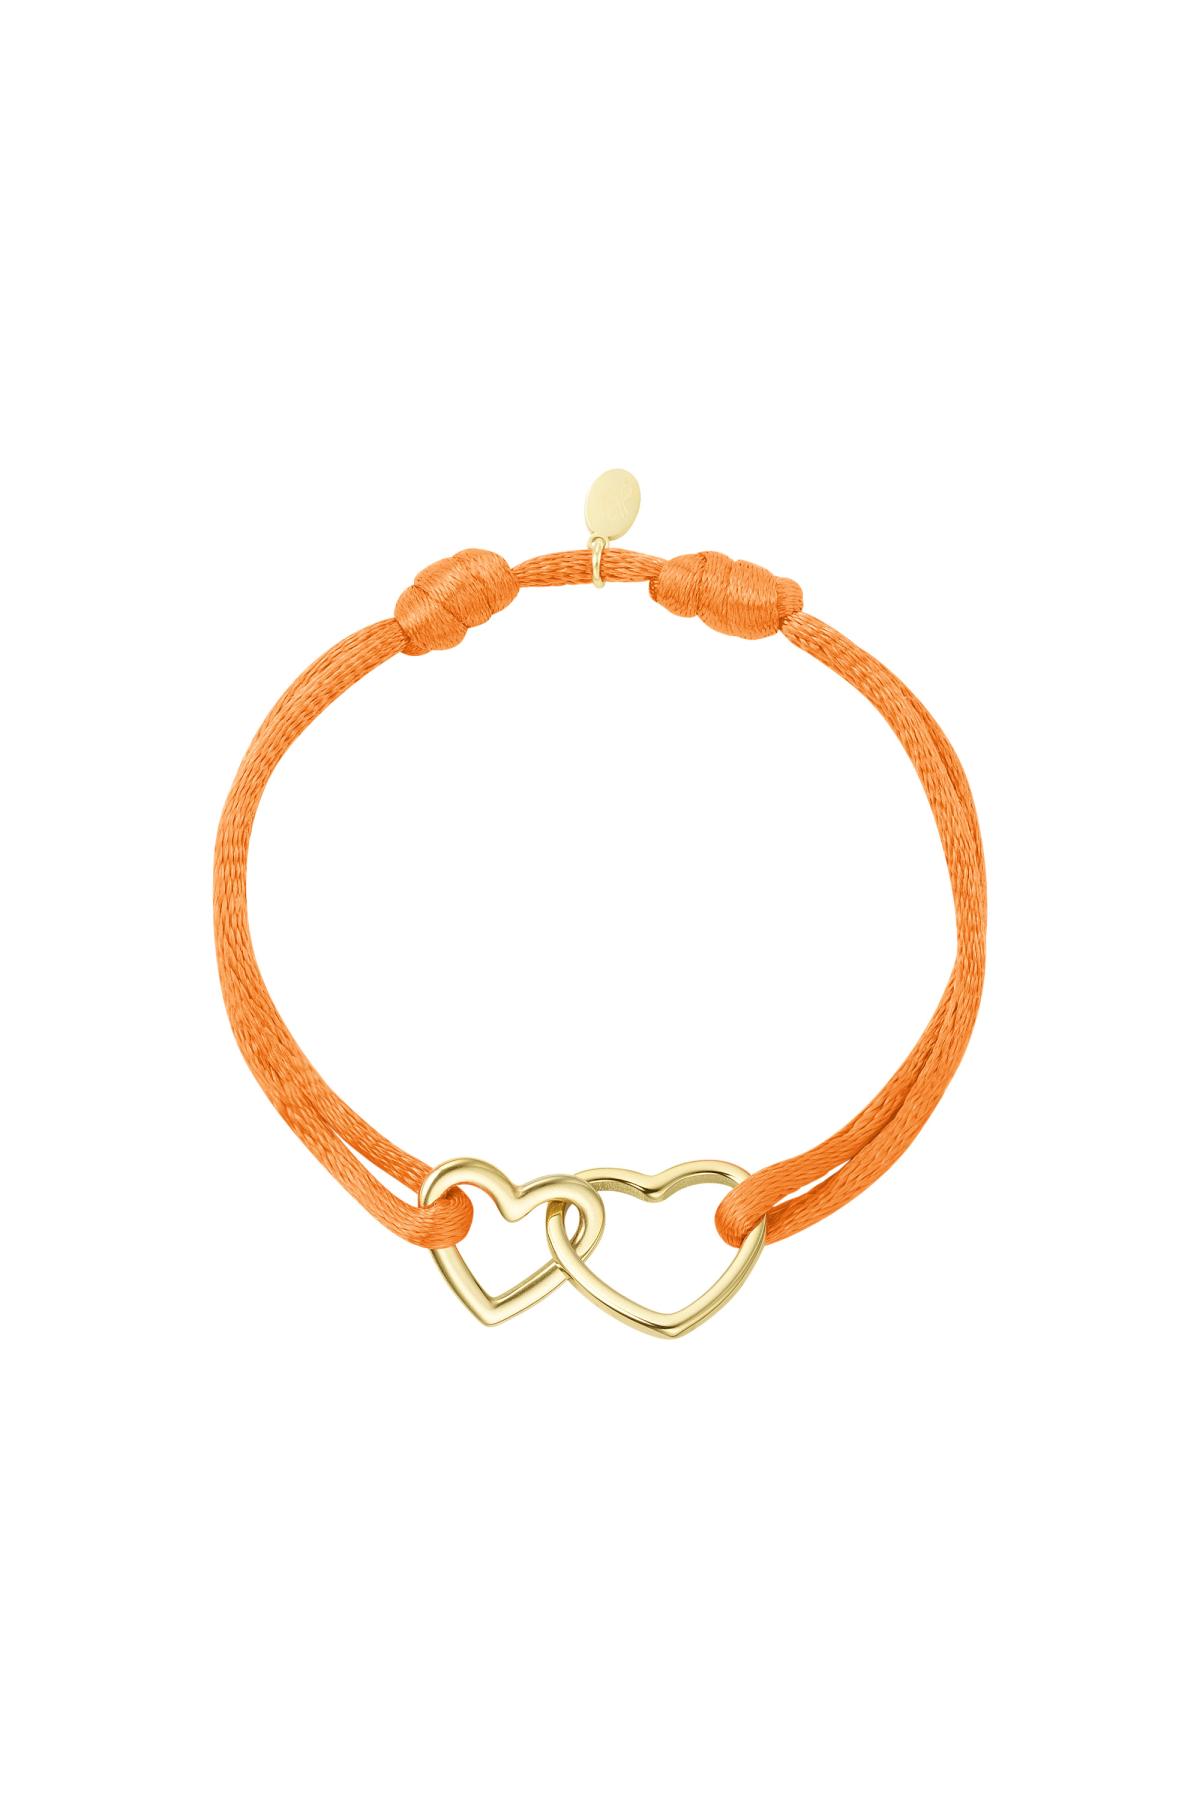 Stoffen armband hartjes Oranje & Goud Stainless Steel h5 